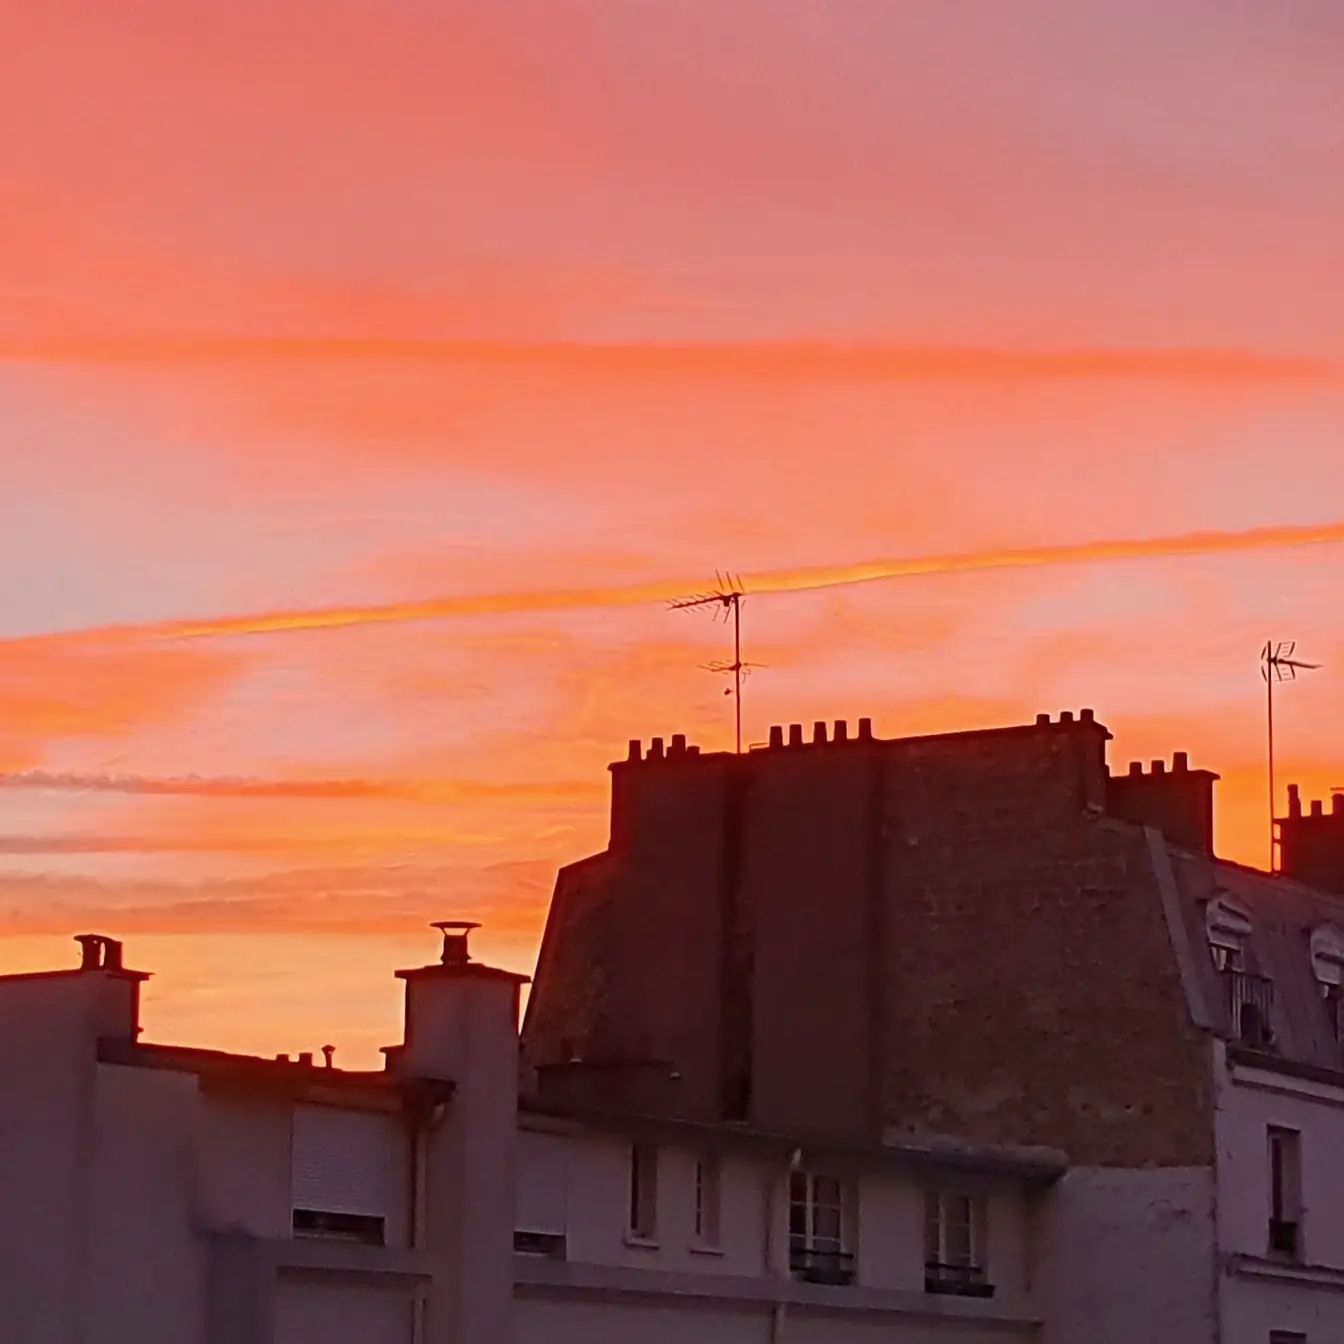 Vision from my windows at sunrise. Part2
.
.
.
#photography #sunrise #doplife #director #réalisateur #paris #rose #sky